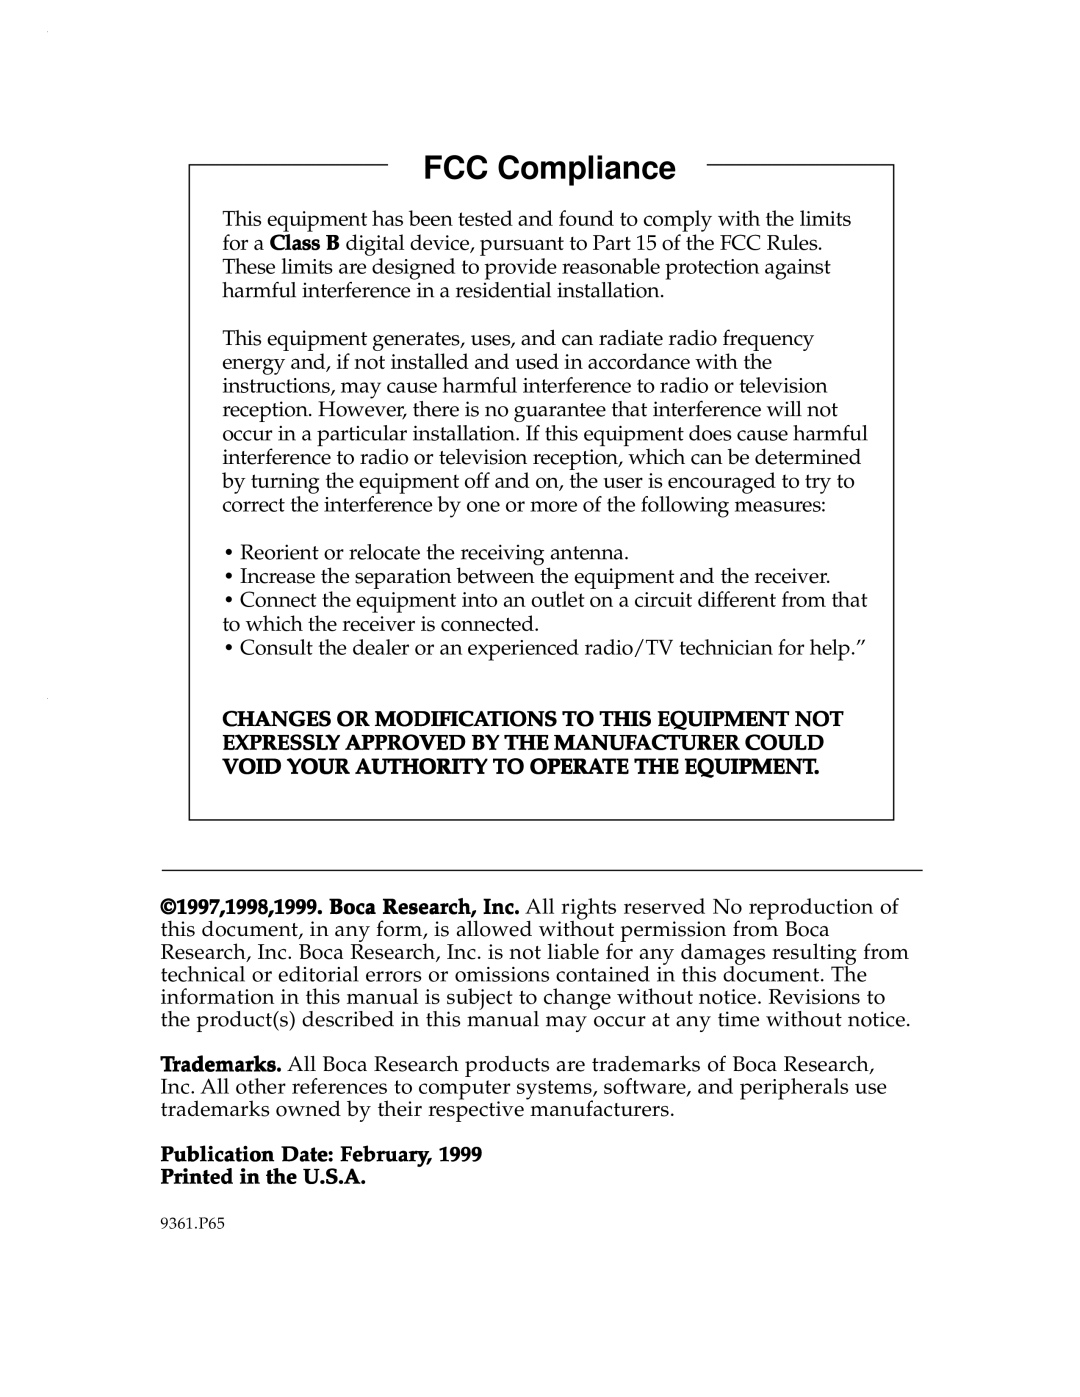 Boca Research Turbo1x1, 2x2 manual FCC Compliance, Publication Date February Printed in the U.S.A 